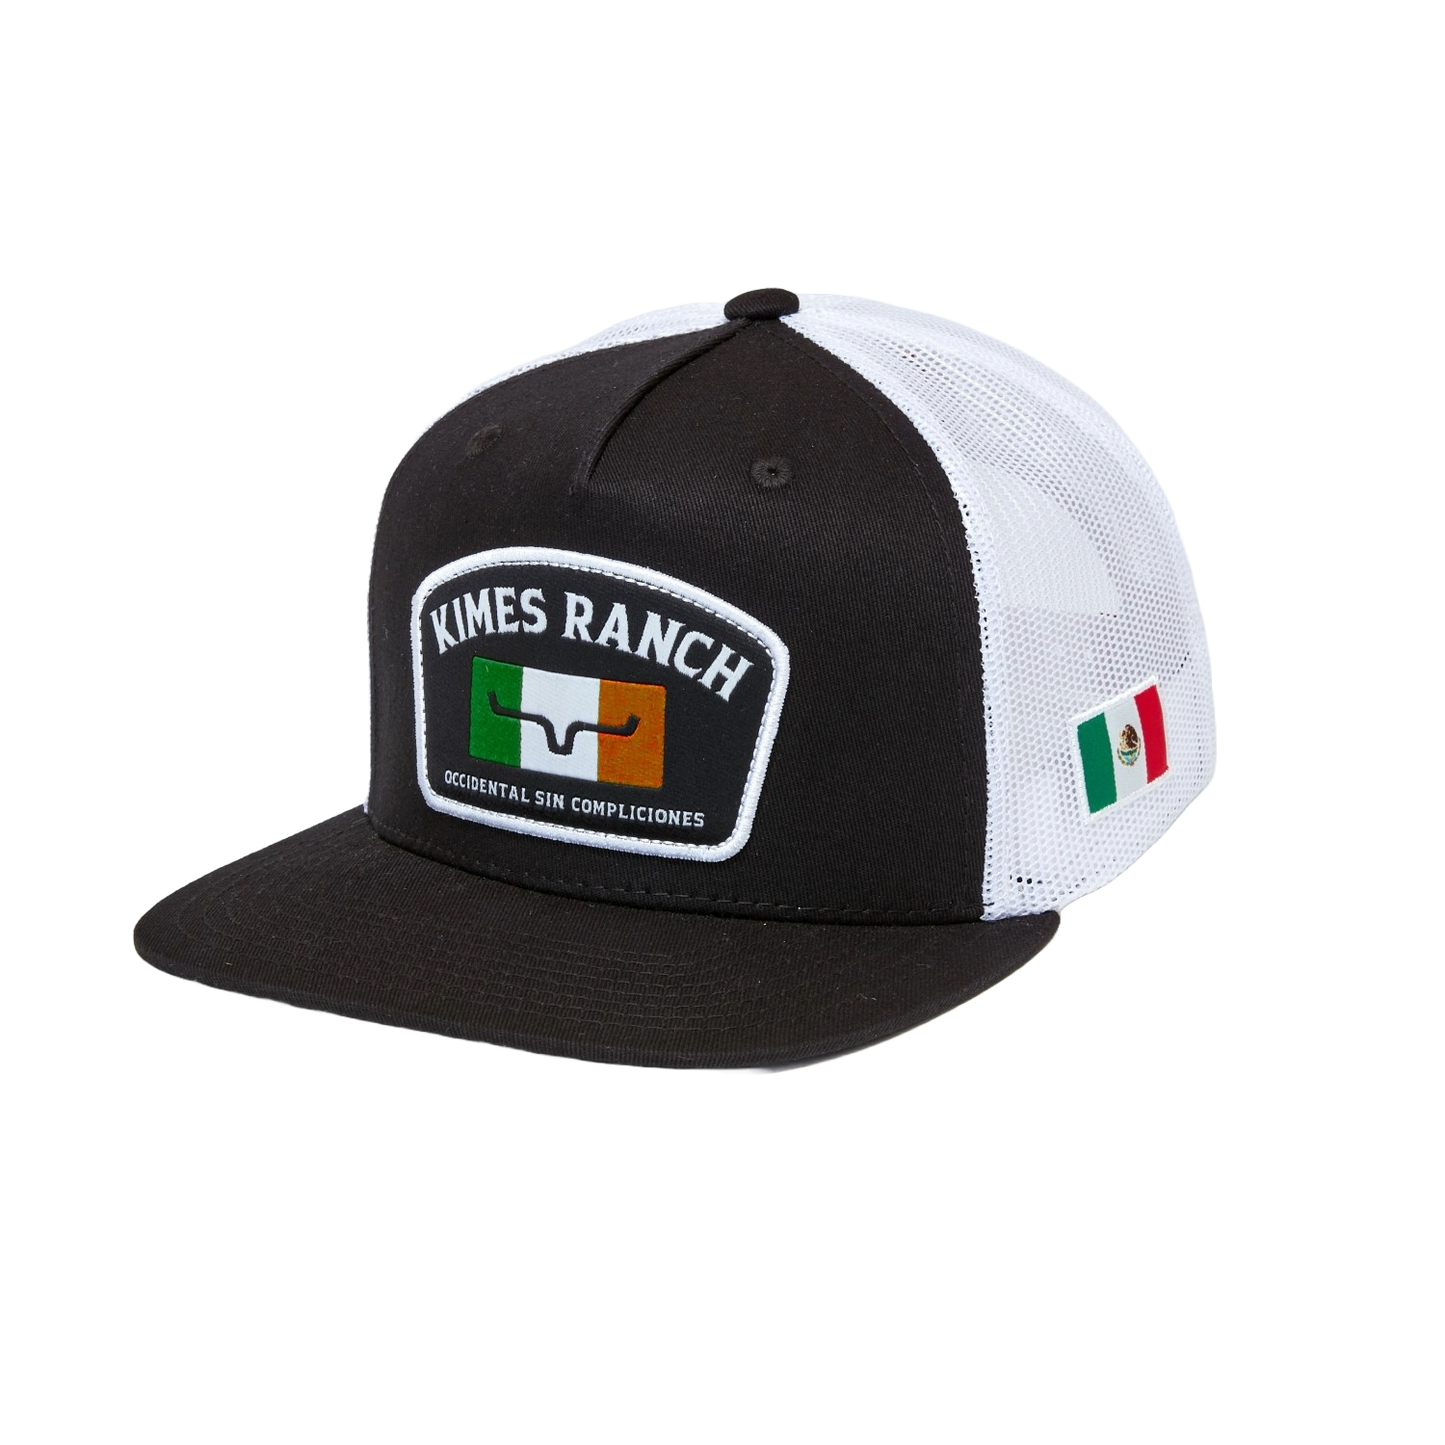 Kimes Ranch Bandera Mexican Flag Black Hat UHA0000025-BLK